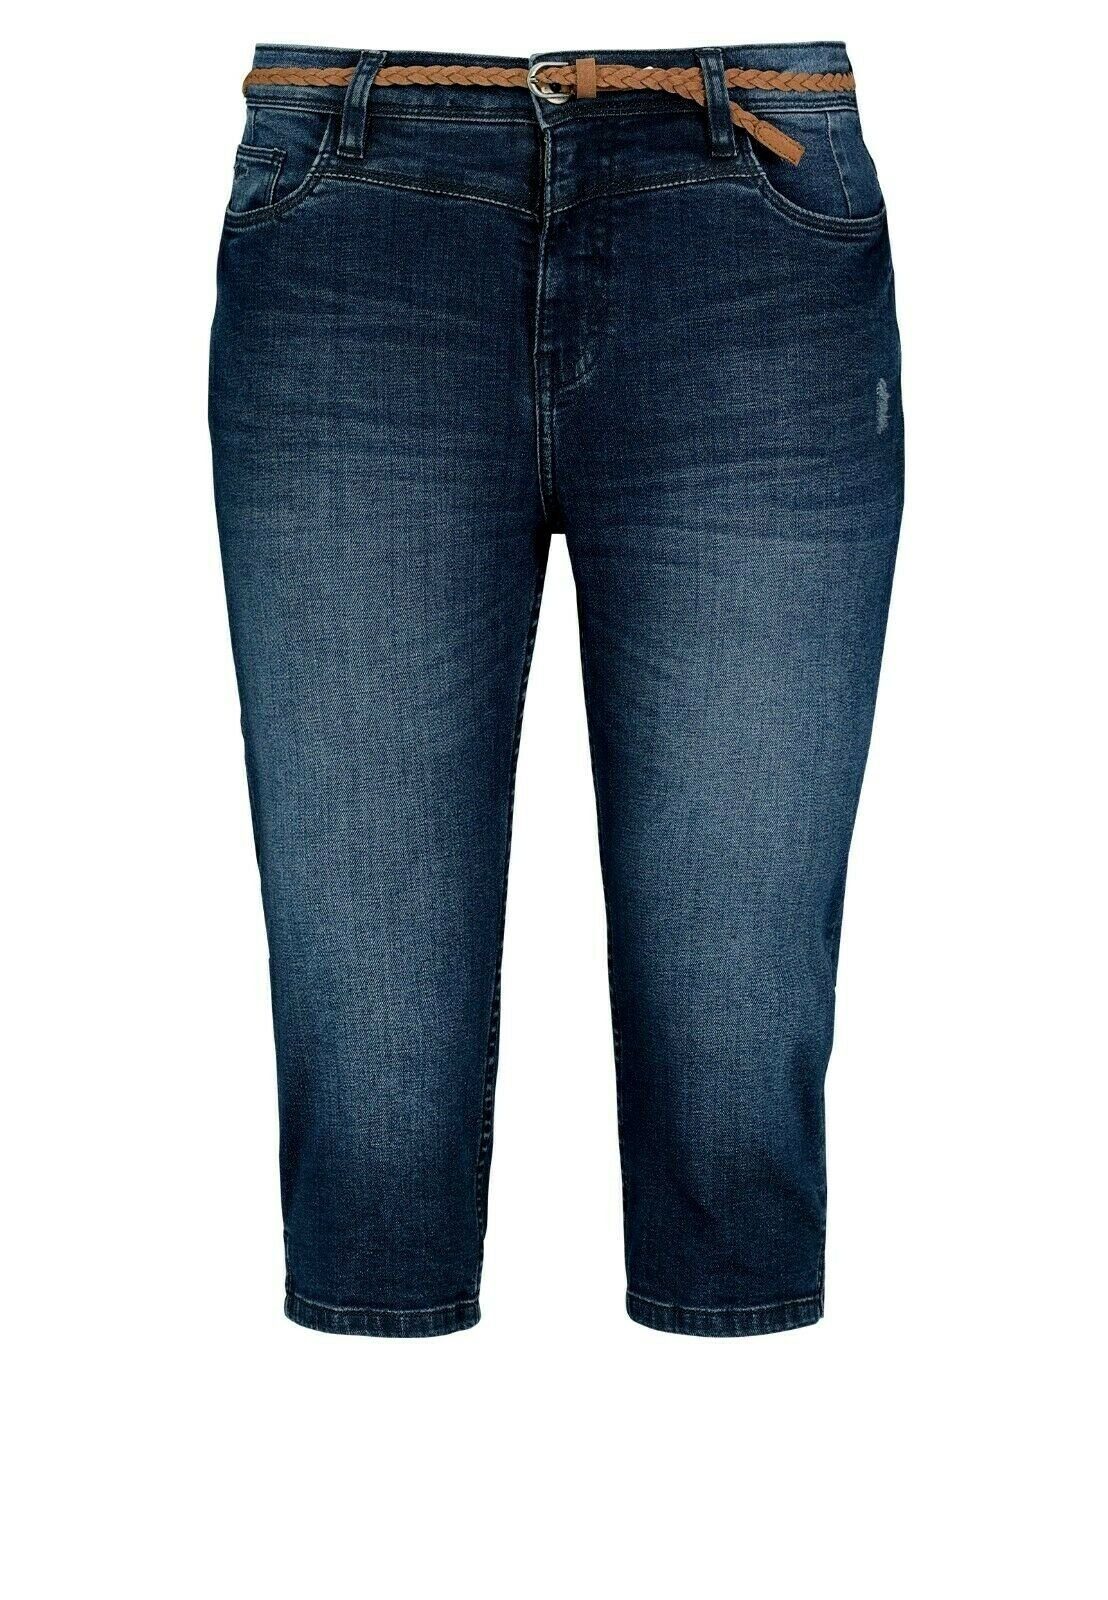 SUBLEVEL Bermudas Damen Capri Hose Jeans Shorts 3/4 Hose Short Bermuda mit Flechtgürtel Dunkelblau